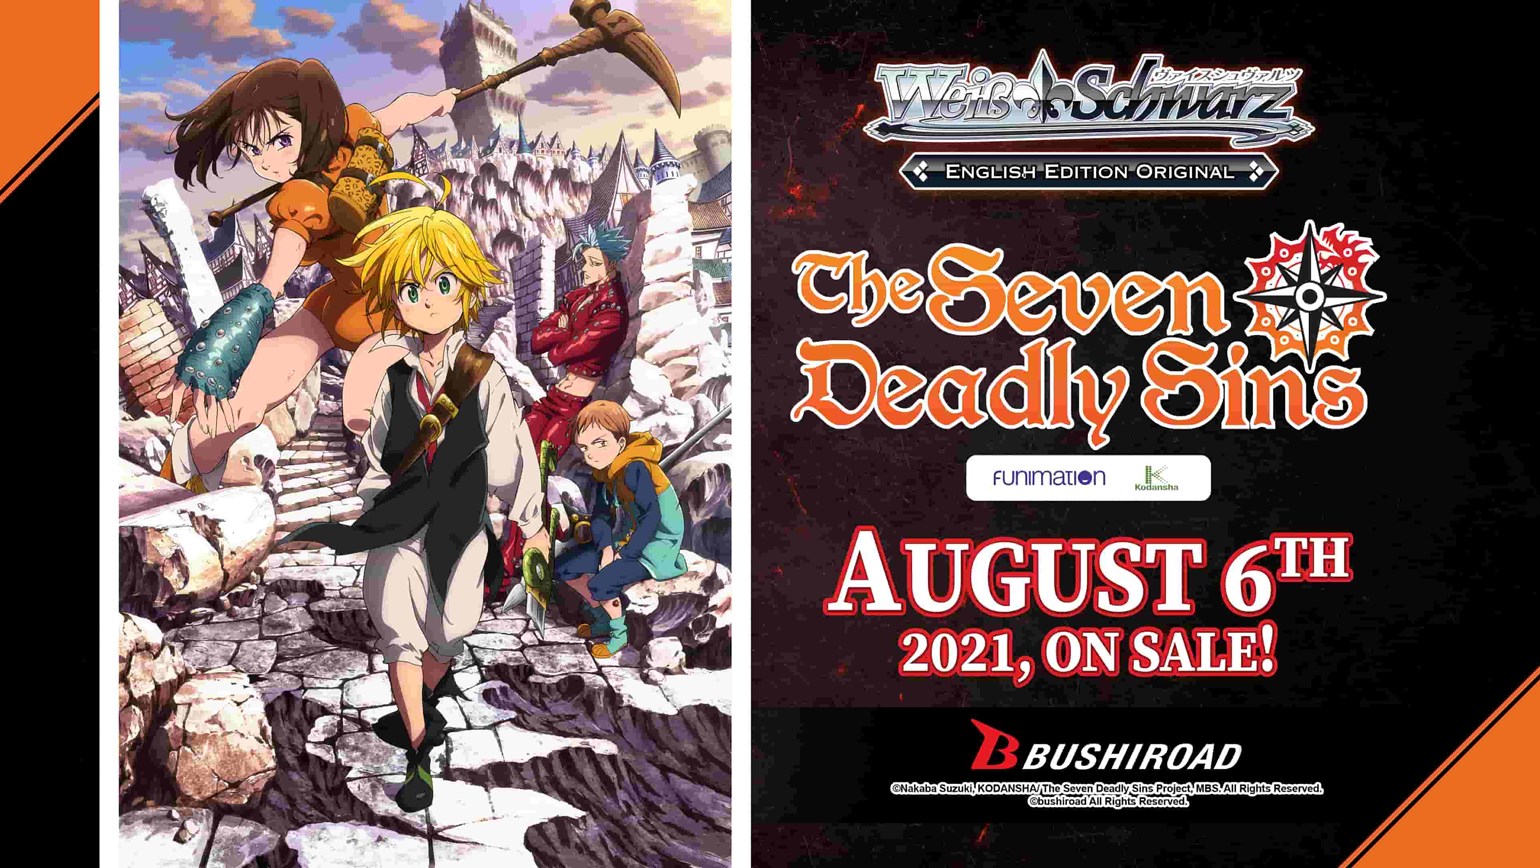 Weiss Schwarz: The Seven Deadly Sins Joins the Battle August 6, 2021!